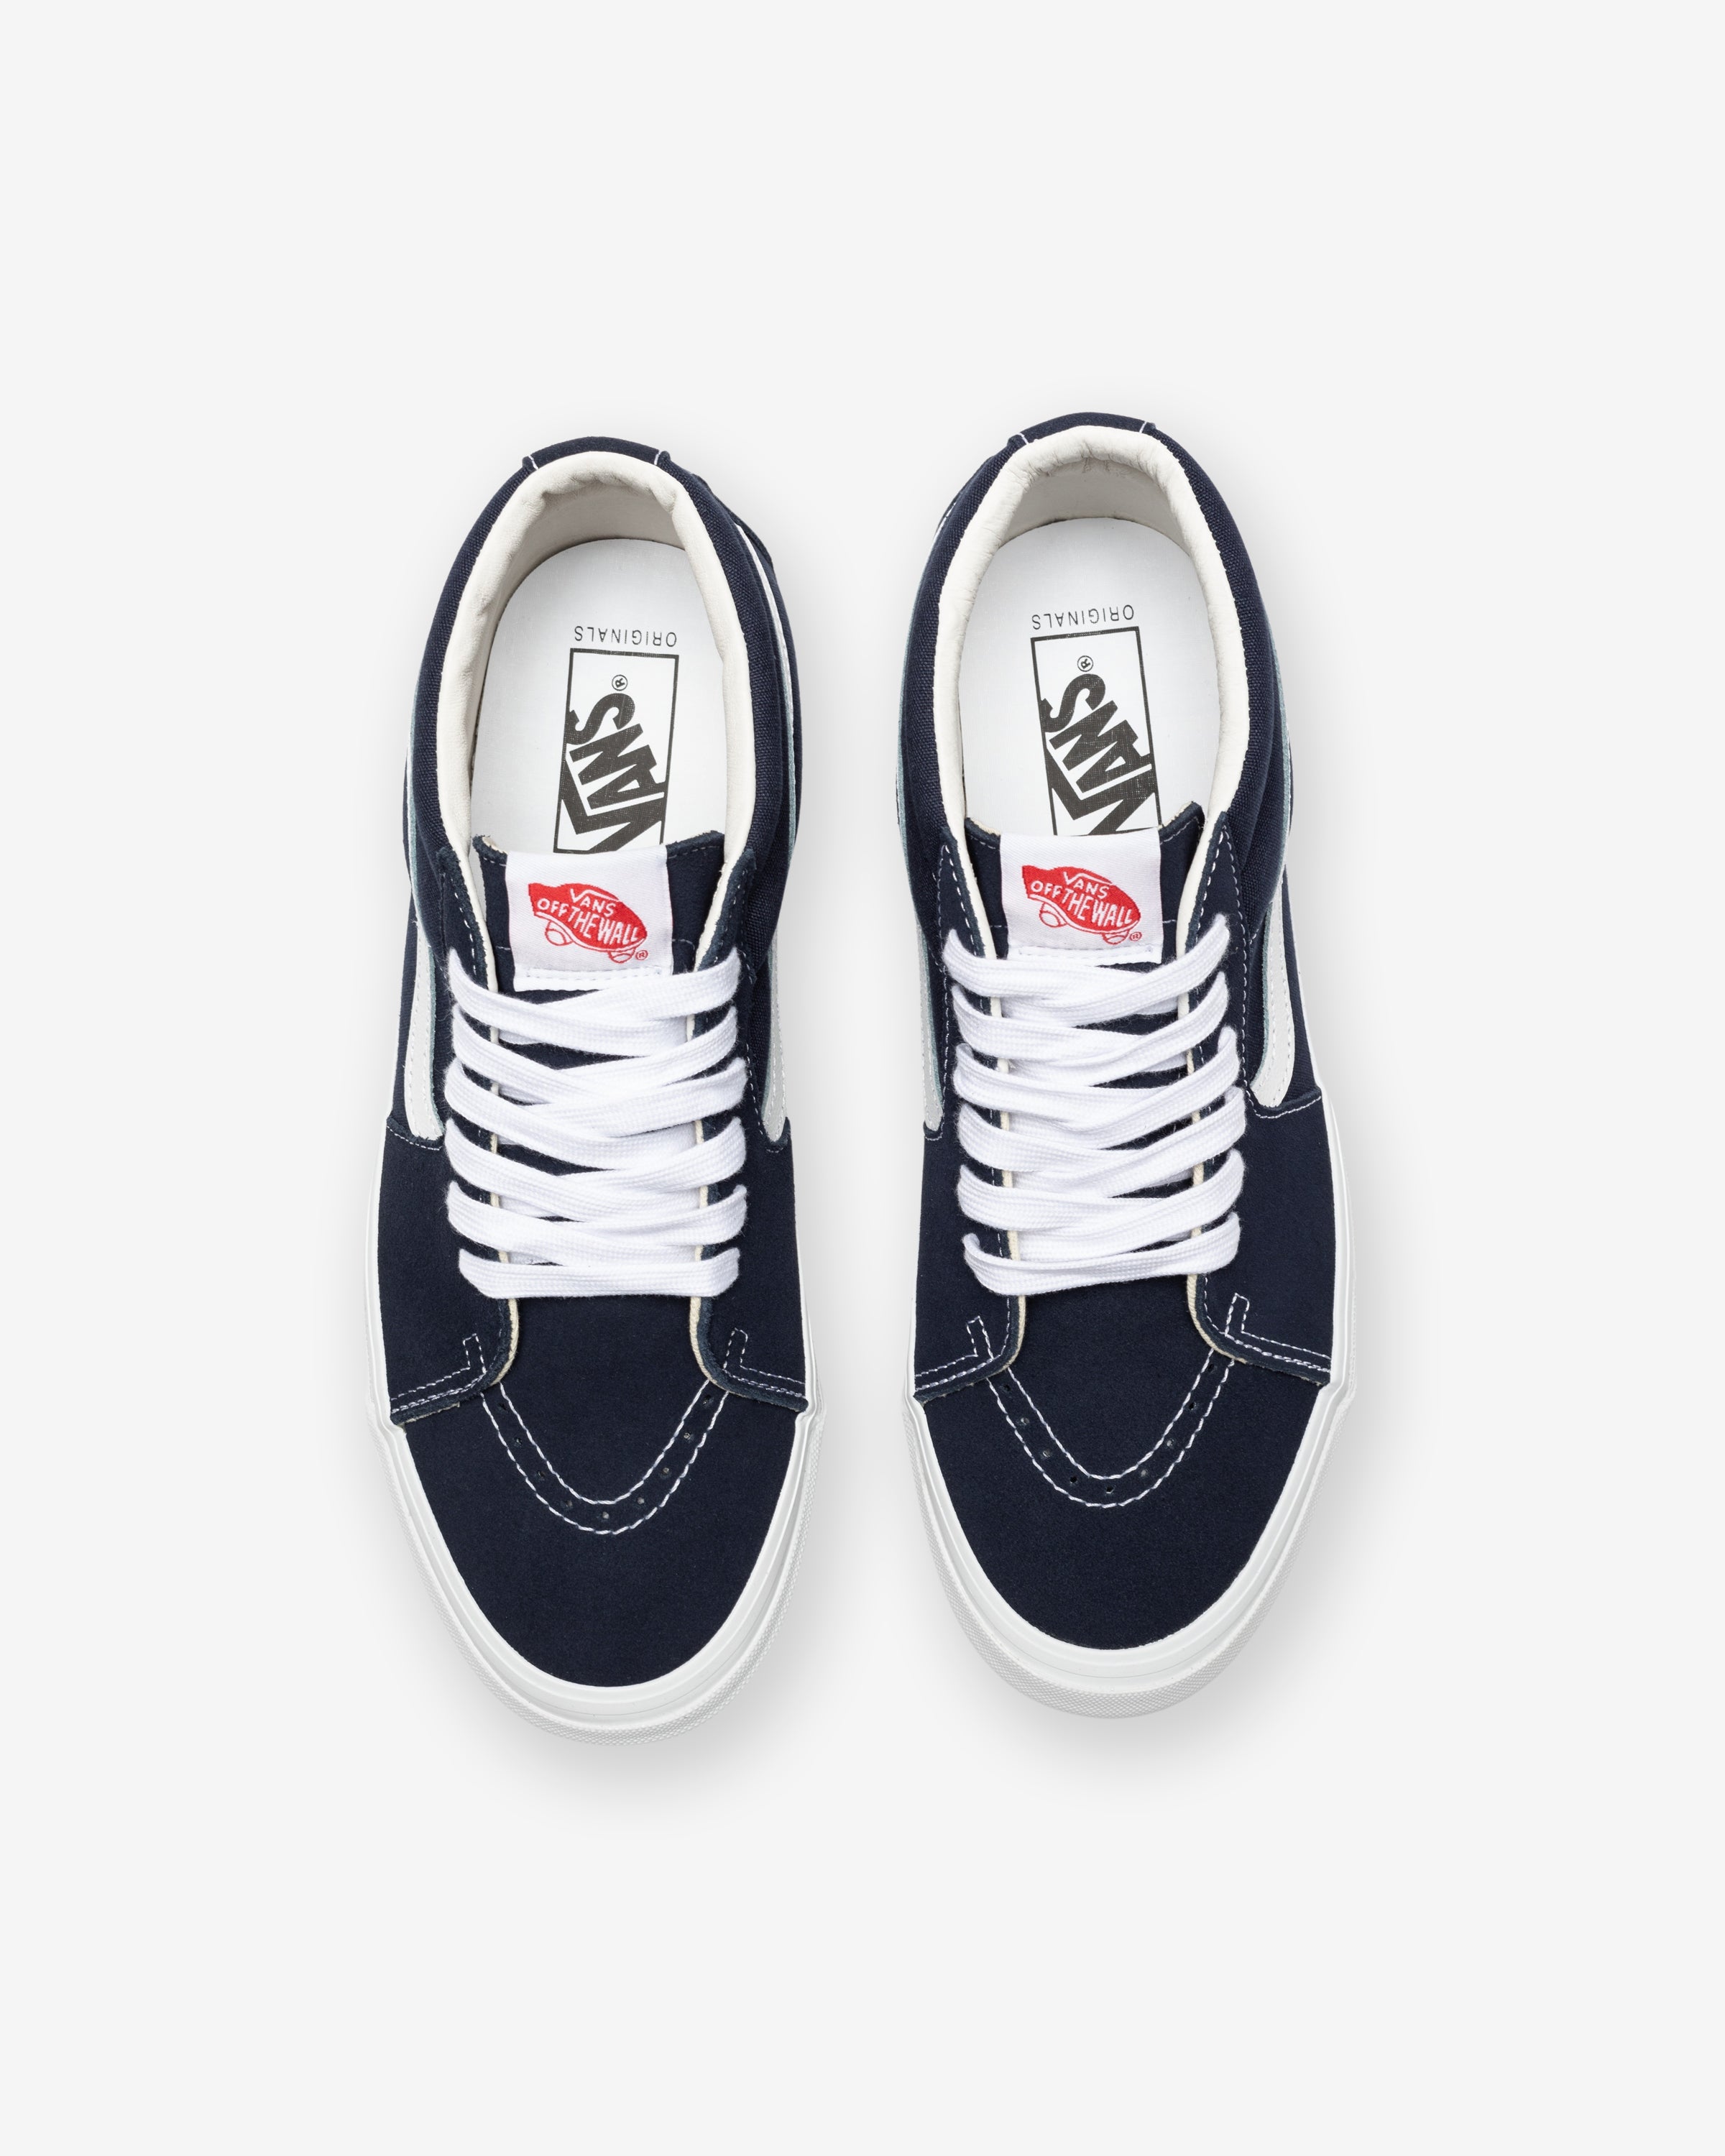 Louis Vuitton LVSK8 Sneaker Navy White : u/ogkicksme